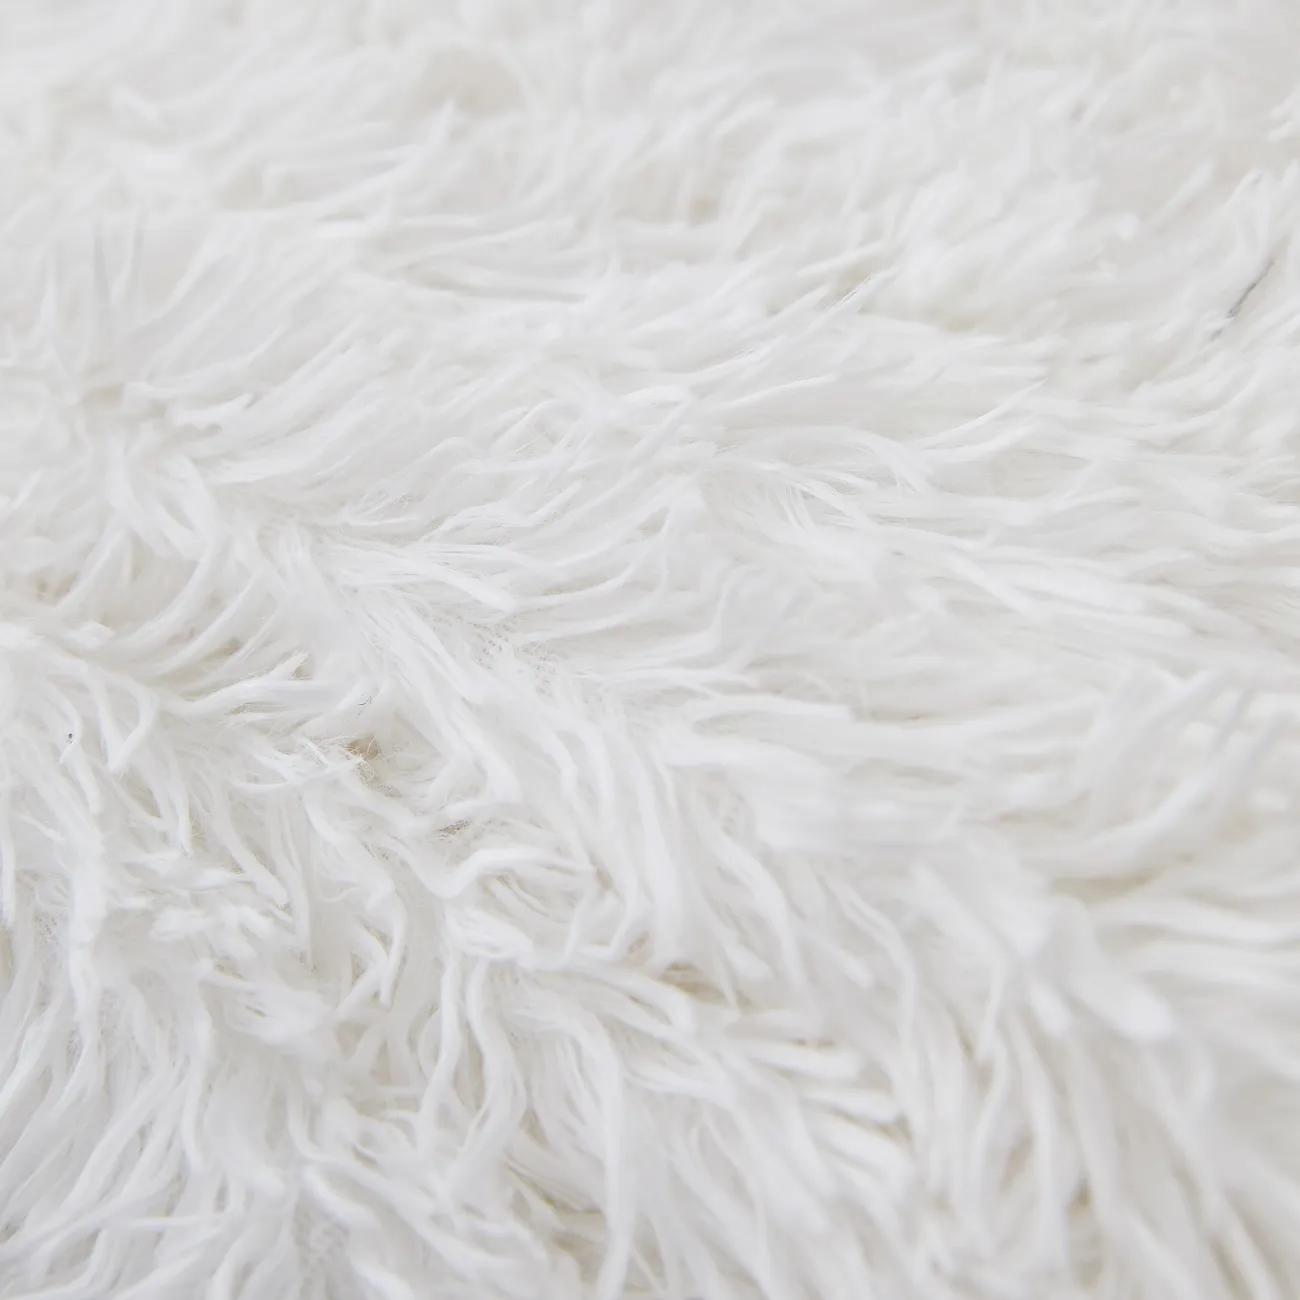 Premium White PV Fleece Blanket - Ultra-Soft, Durable, Machine-Washable - Perfect for Home Comfort and Stylish Decor White big image 1